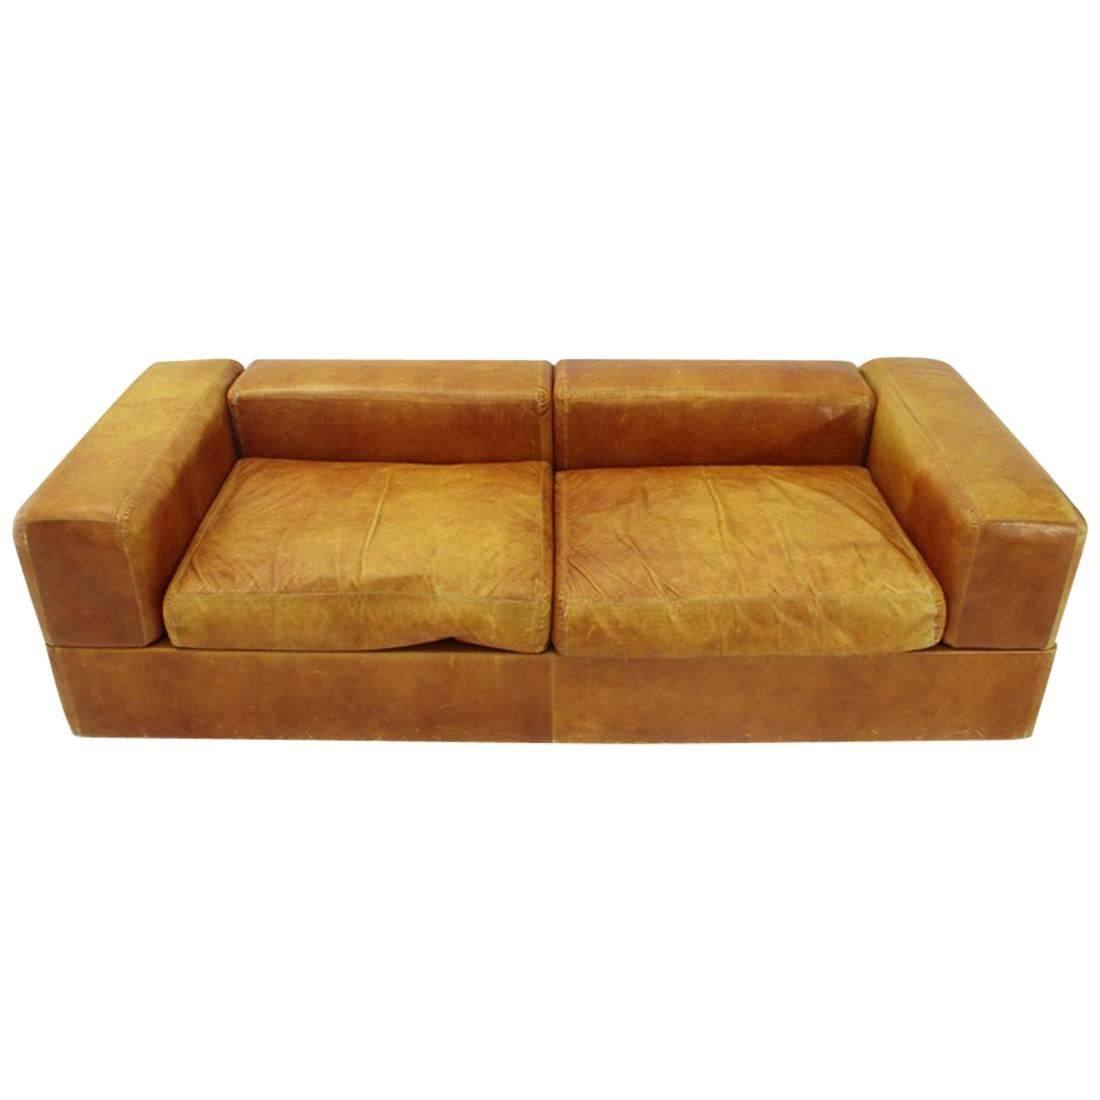 Sofa Bed 711 in Brown Leather by Tito Agnoli for Cinova, 1960s